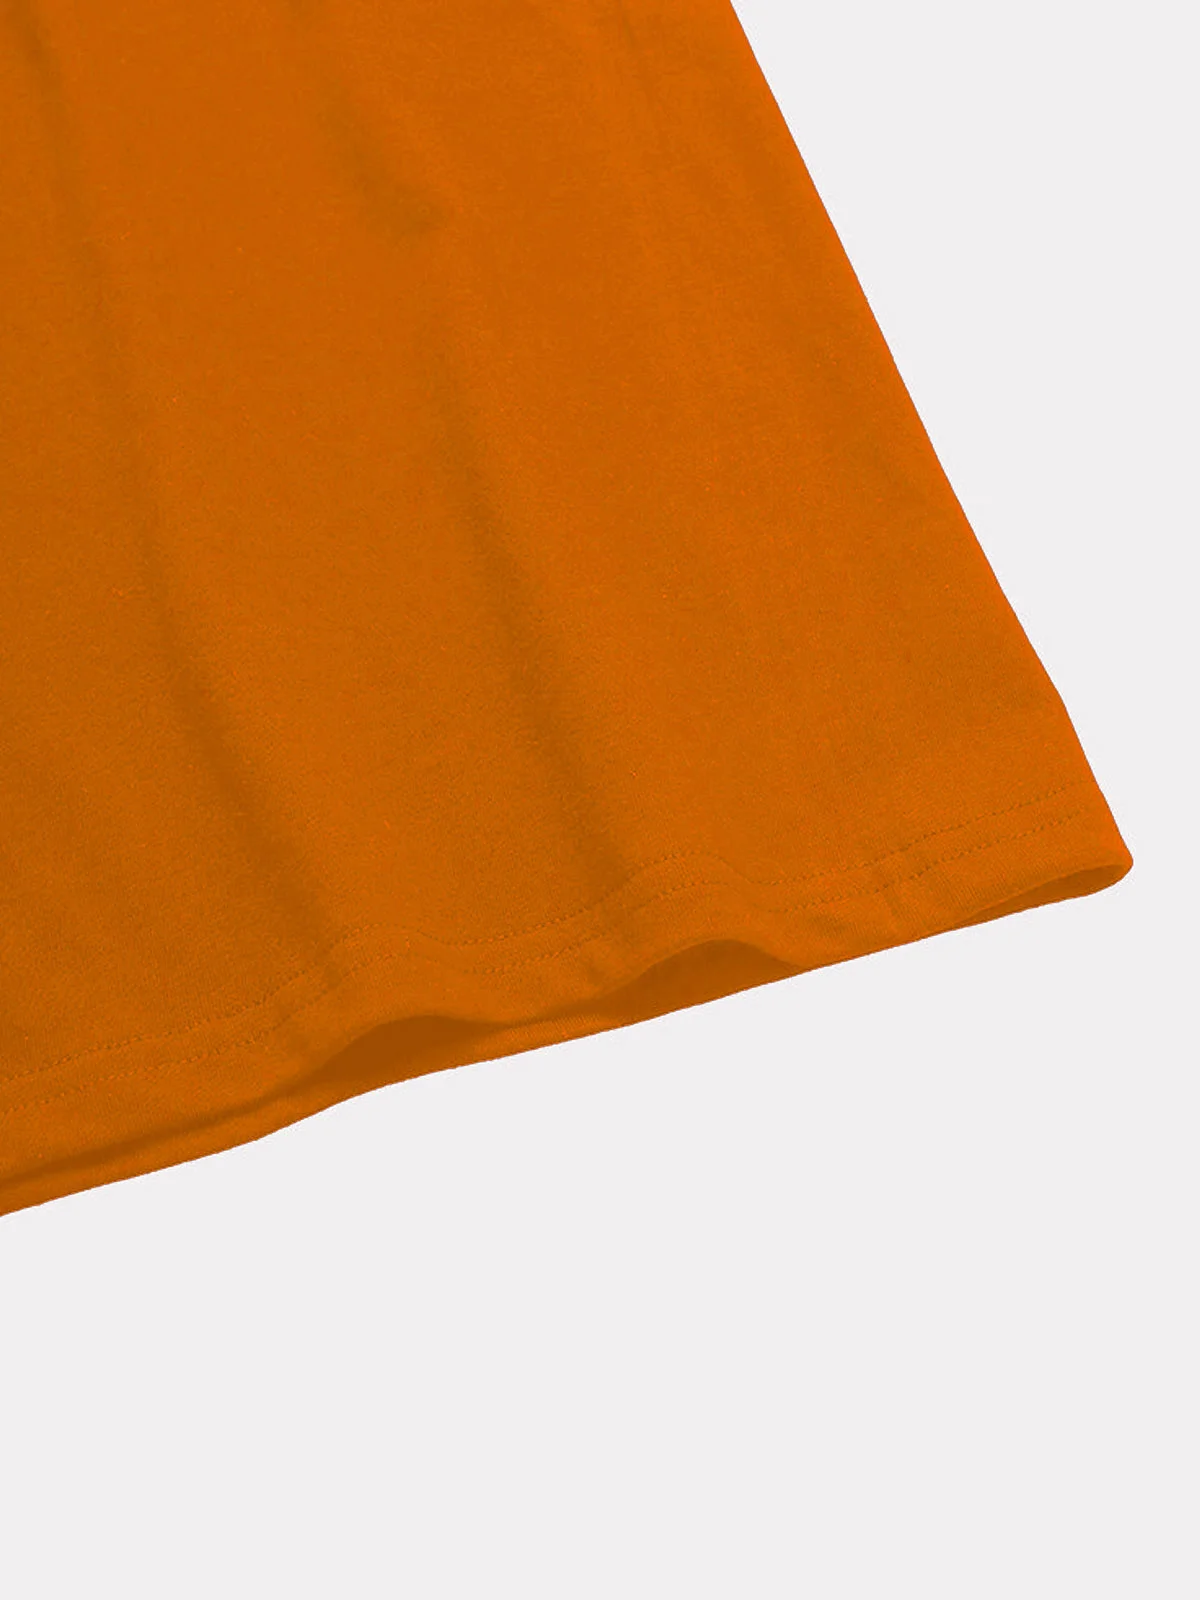 Royaura Vintage Cartoon Orange Men's Casual Short Sleeve Round Neck T-Shirt Stretch Fun Tops